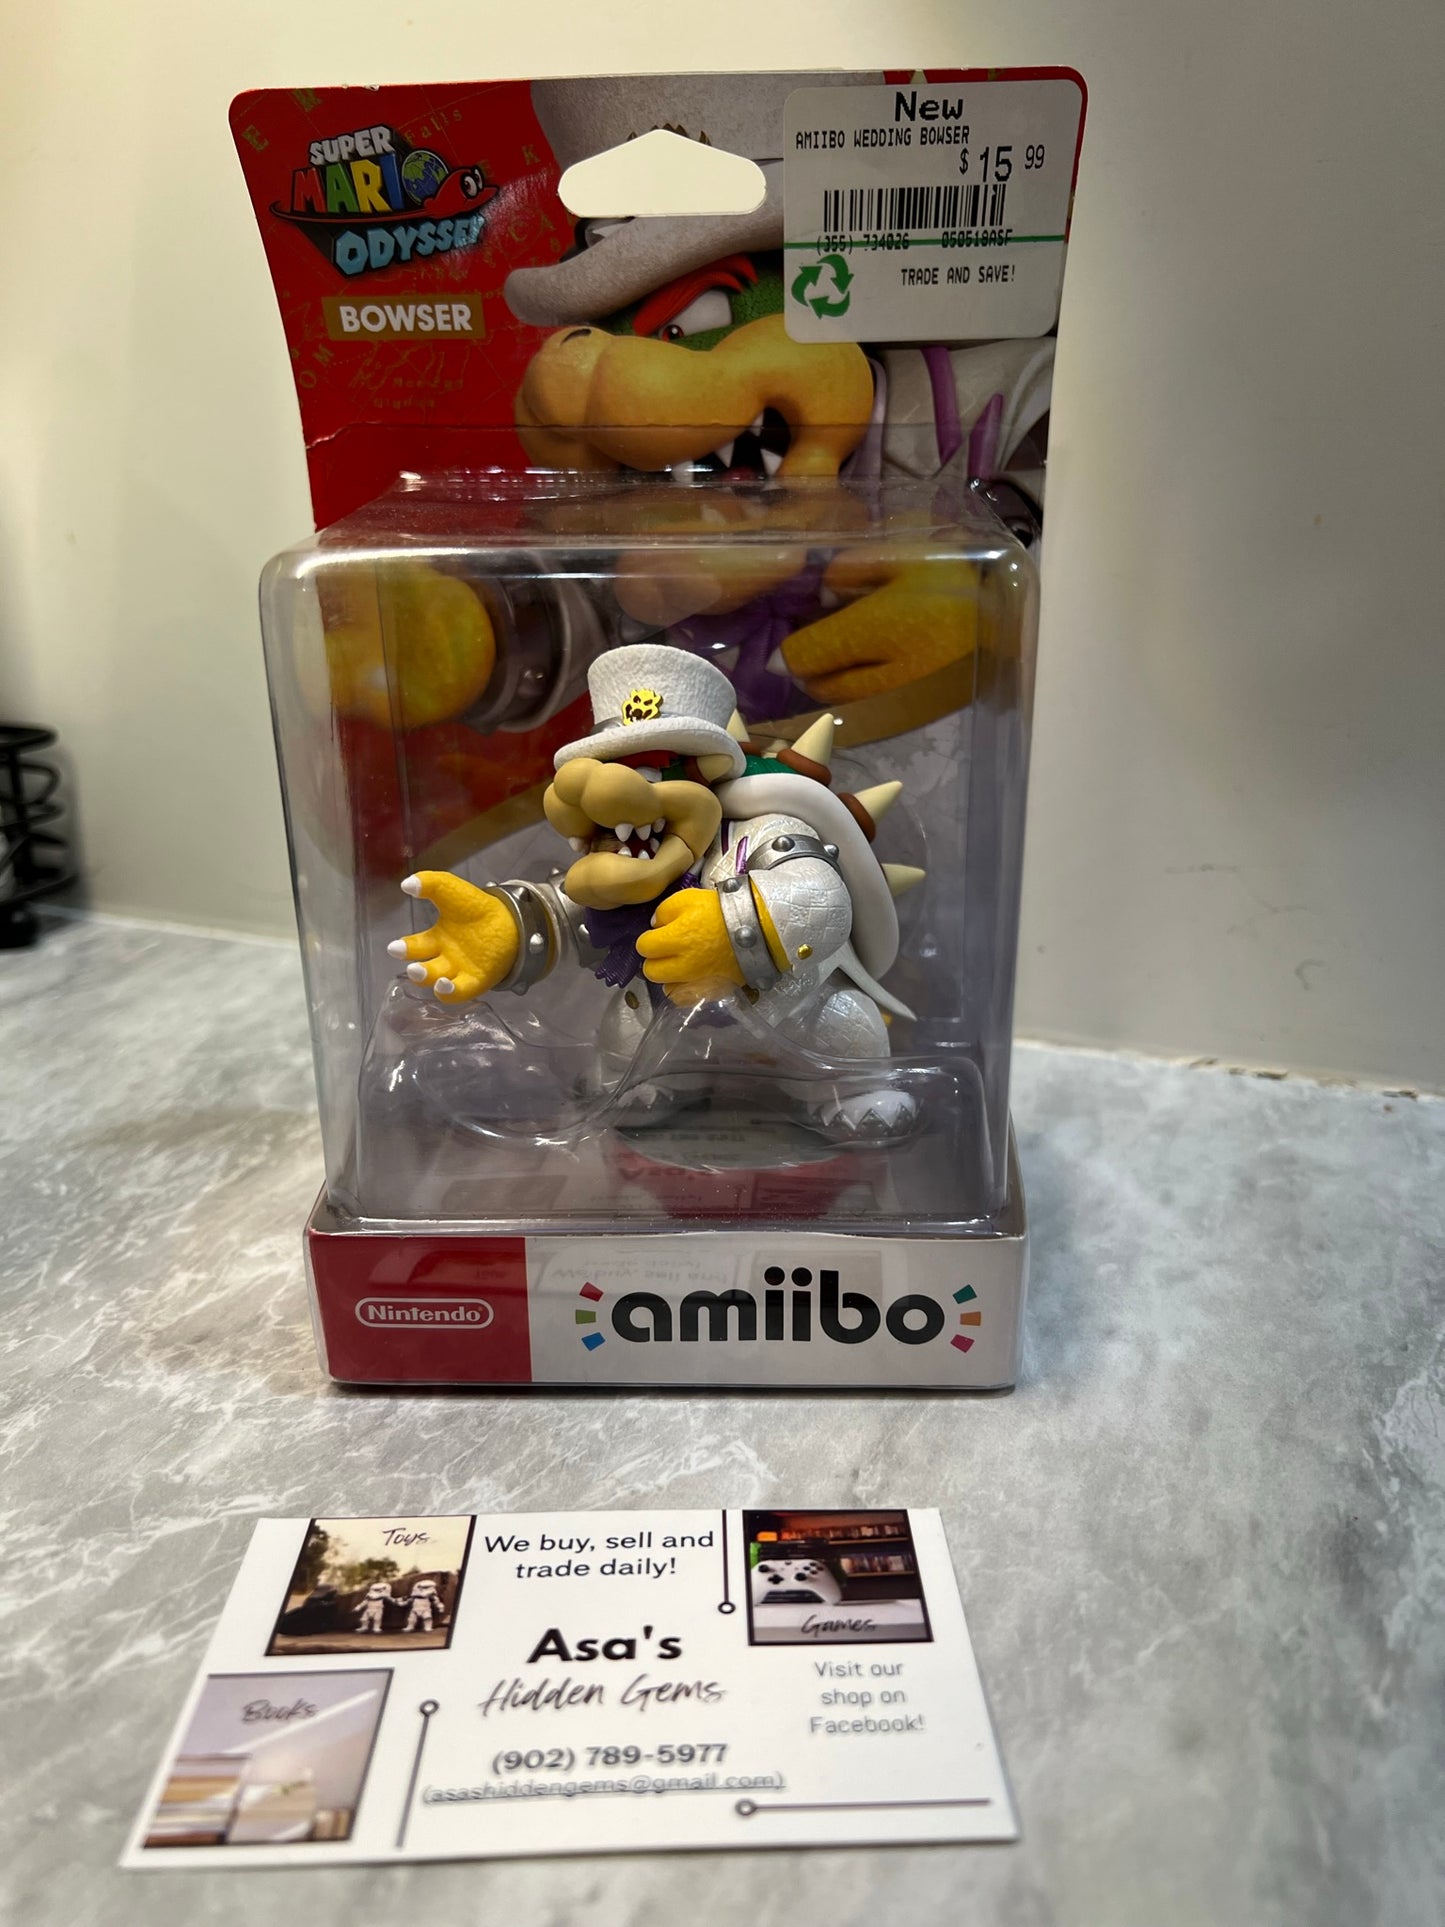 Nintendo Super Mario Odyssey Bowser Wedding Outfit Amiibo Figurine Sealed Box